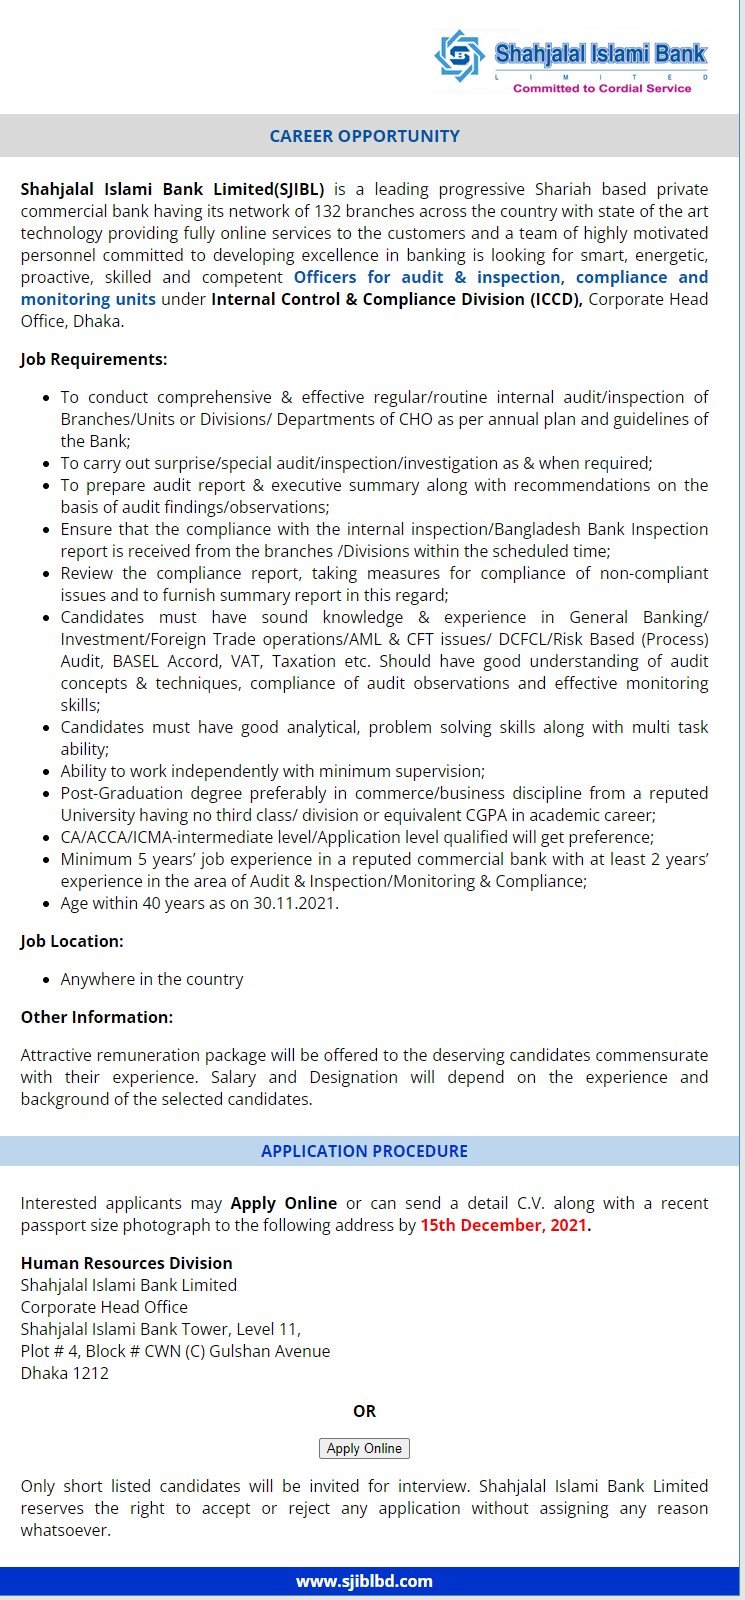 Shahjalal Islami Bank Limited Job Circular 2021 PDF & Image Download